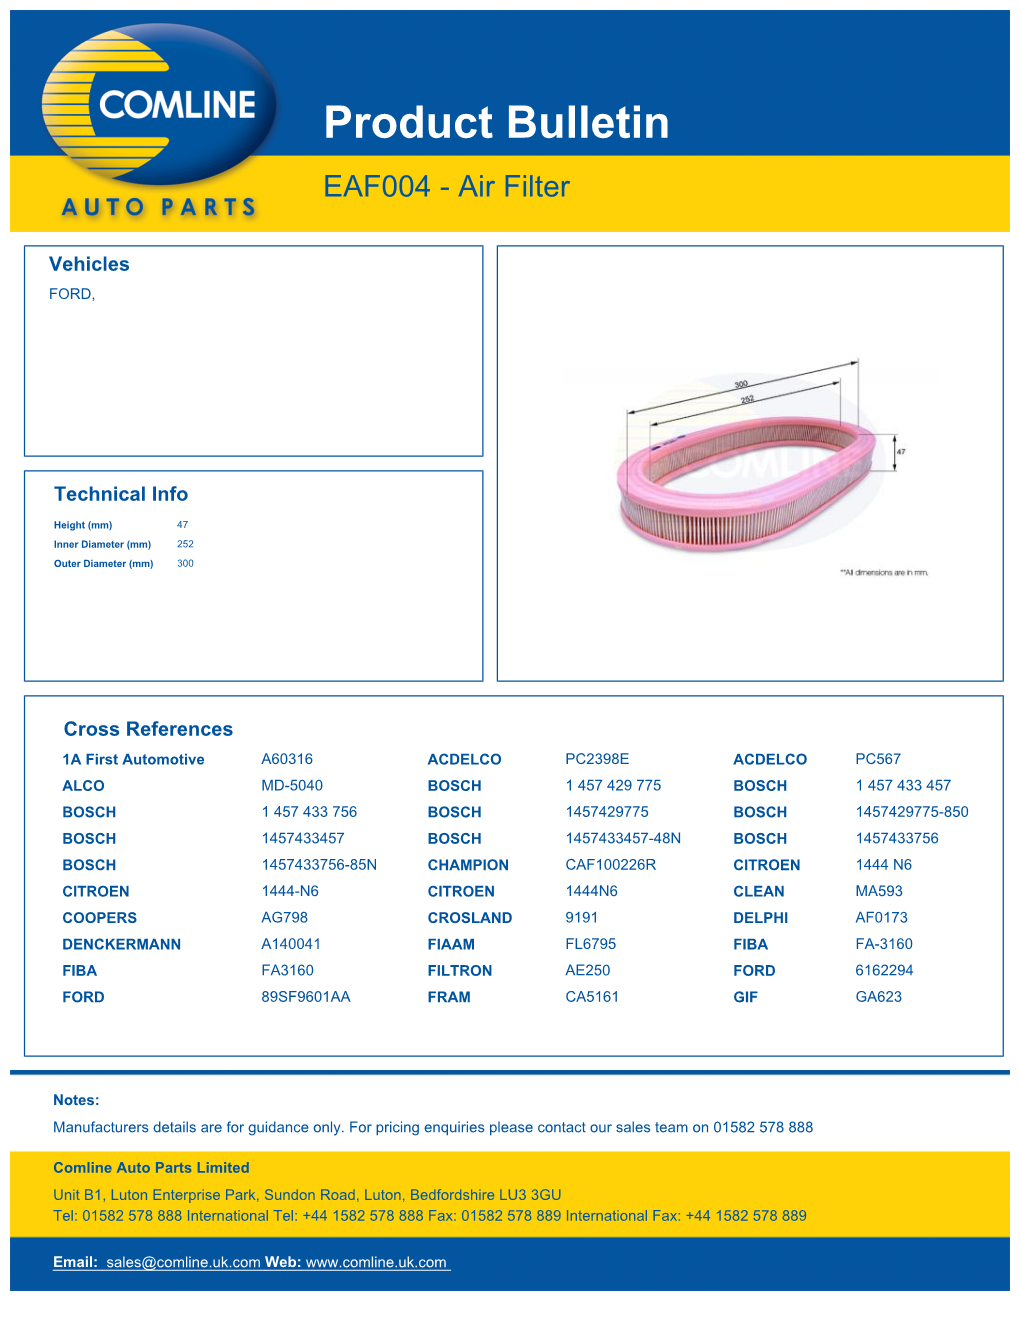 Product Bulletin EAF004 - Air Filter